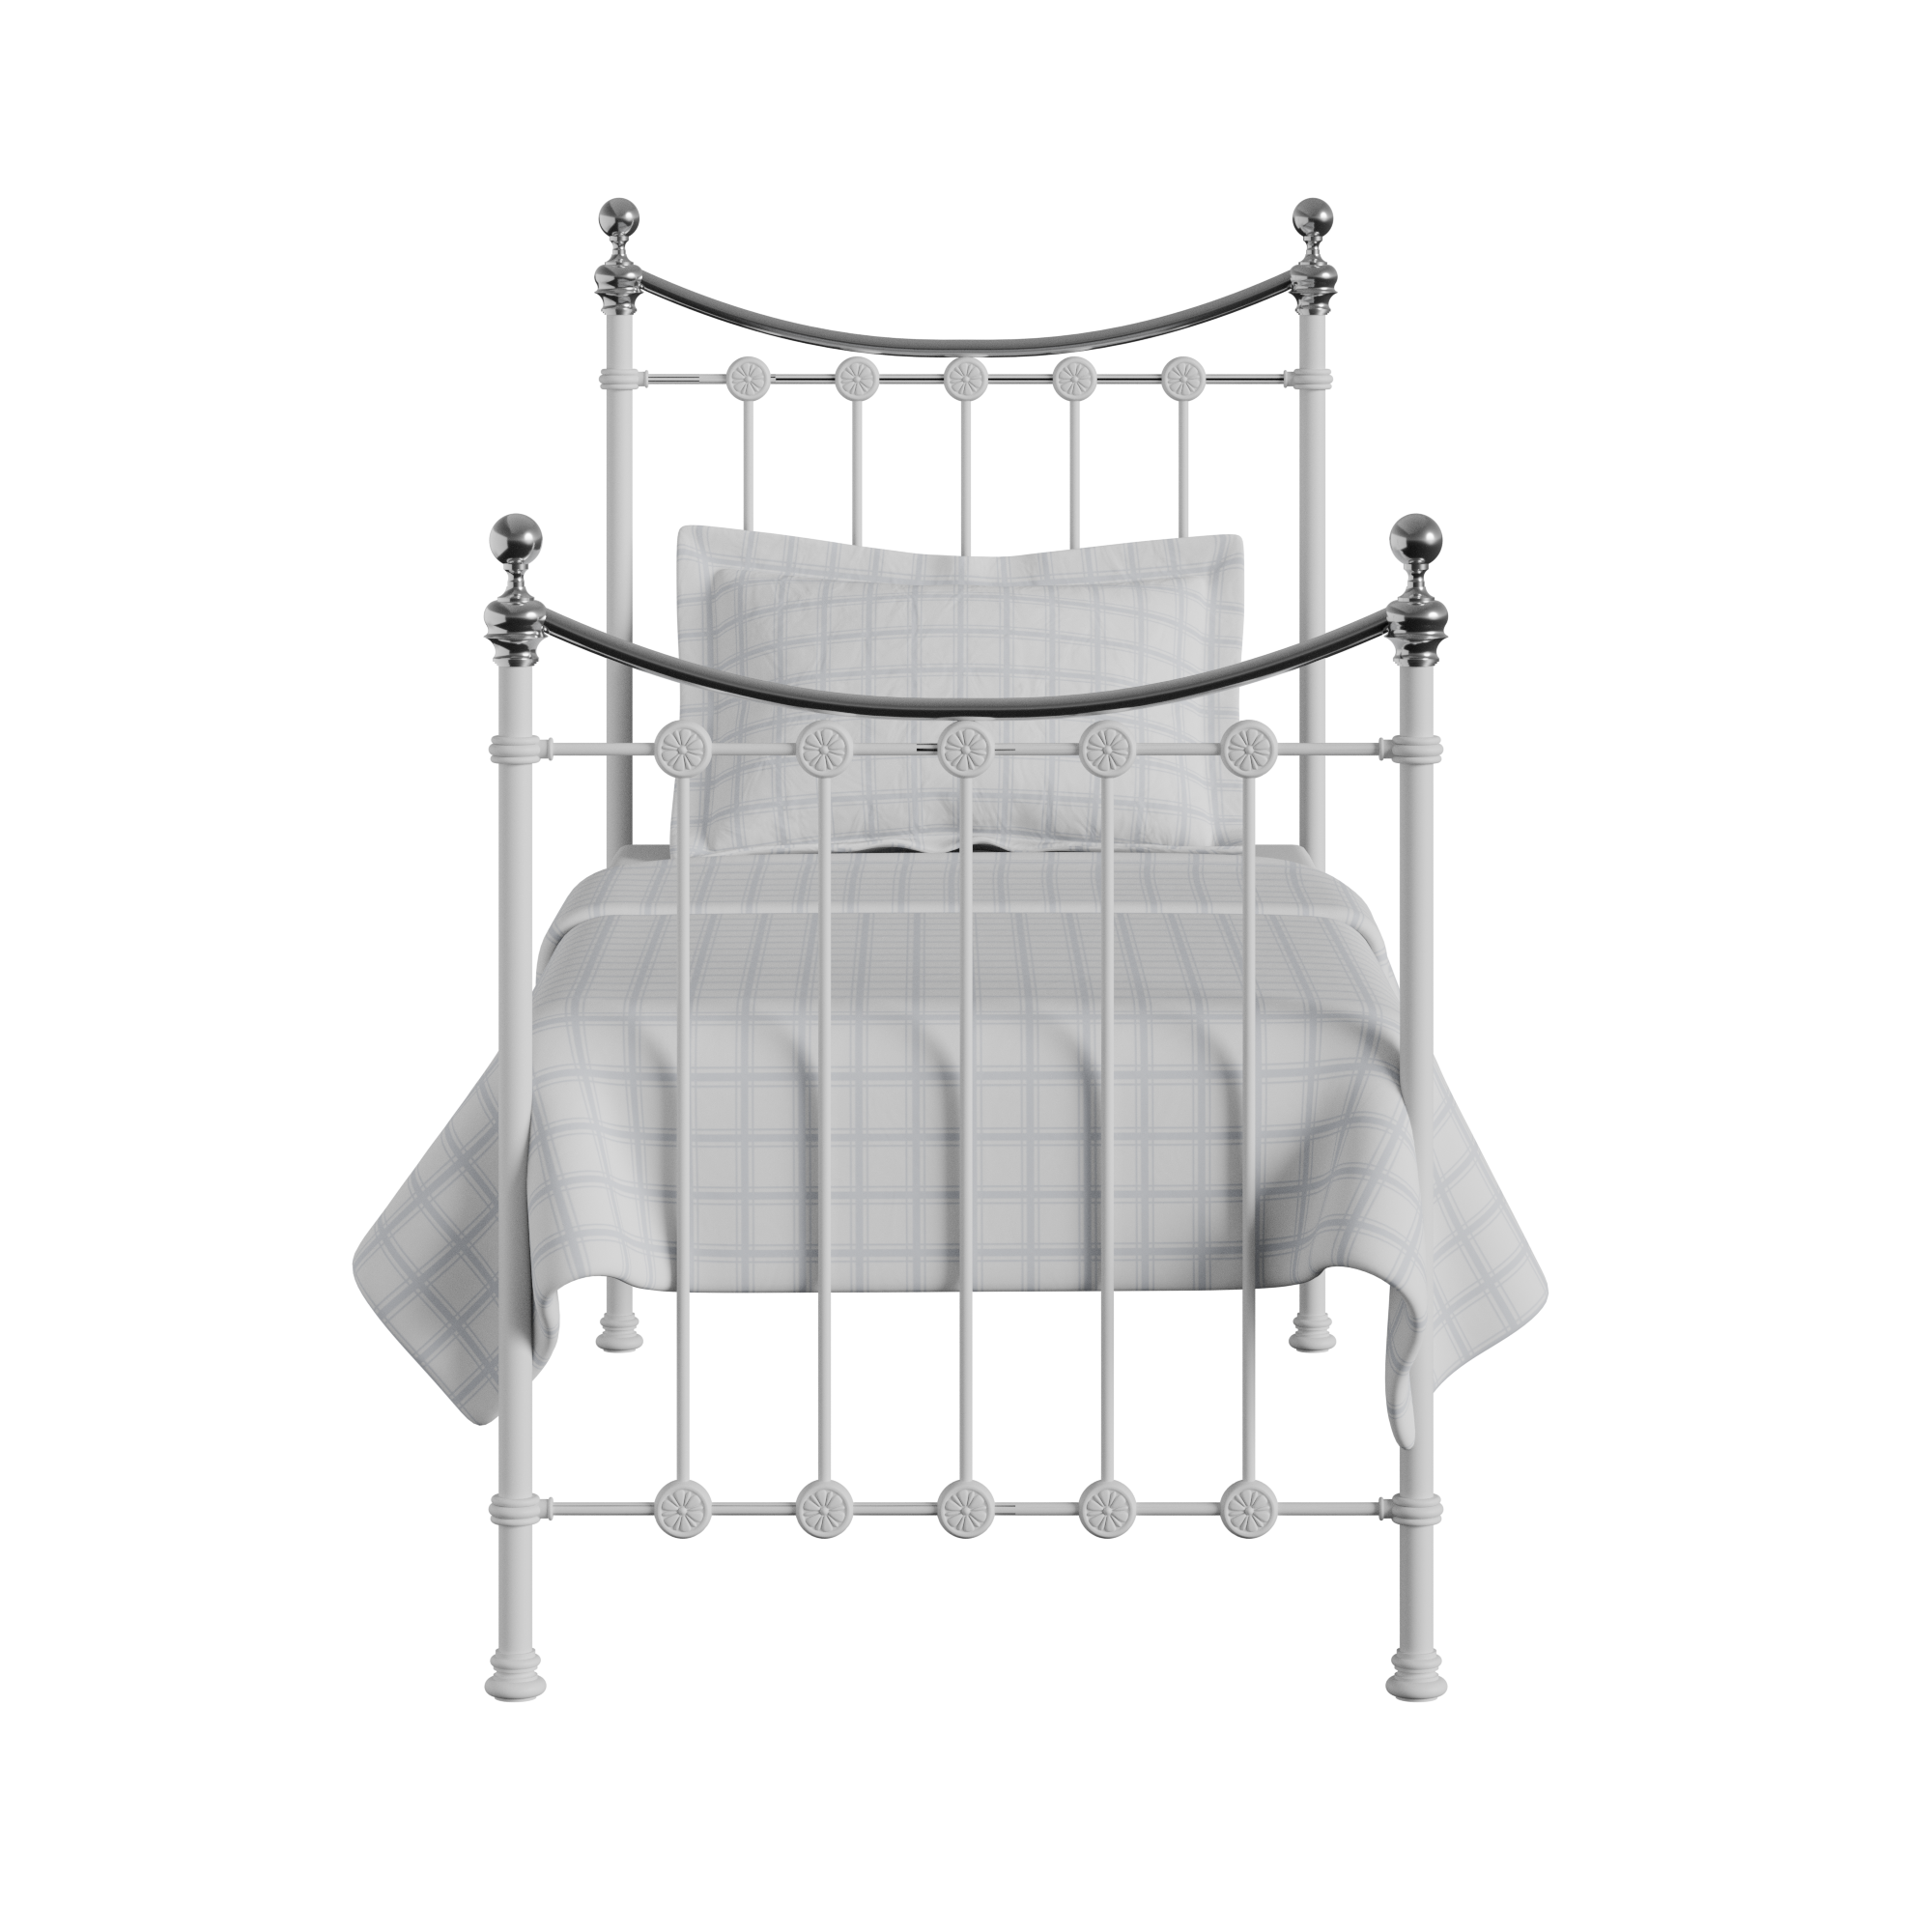 Carrick Chromo iron/metal single bed in white